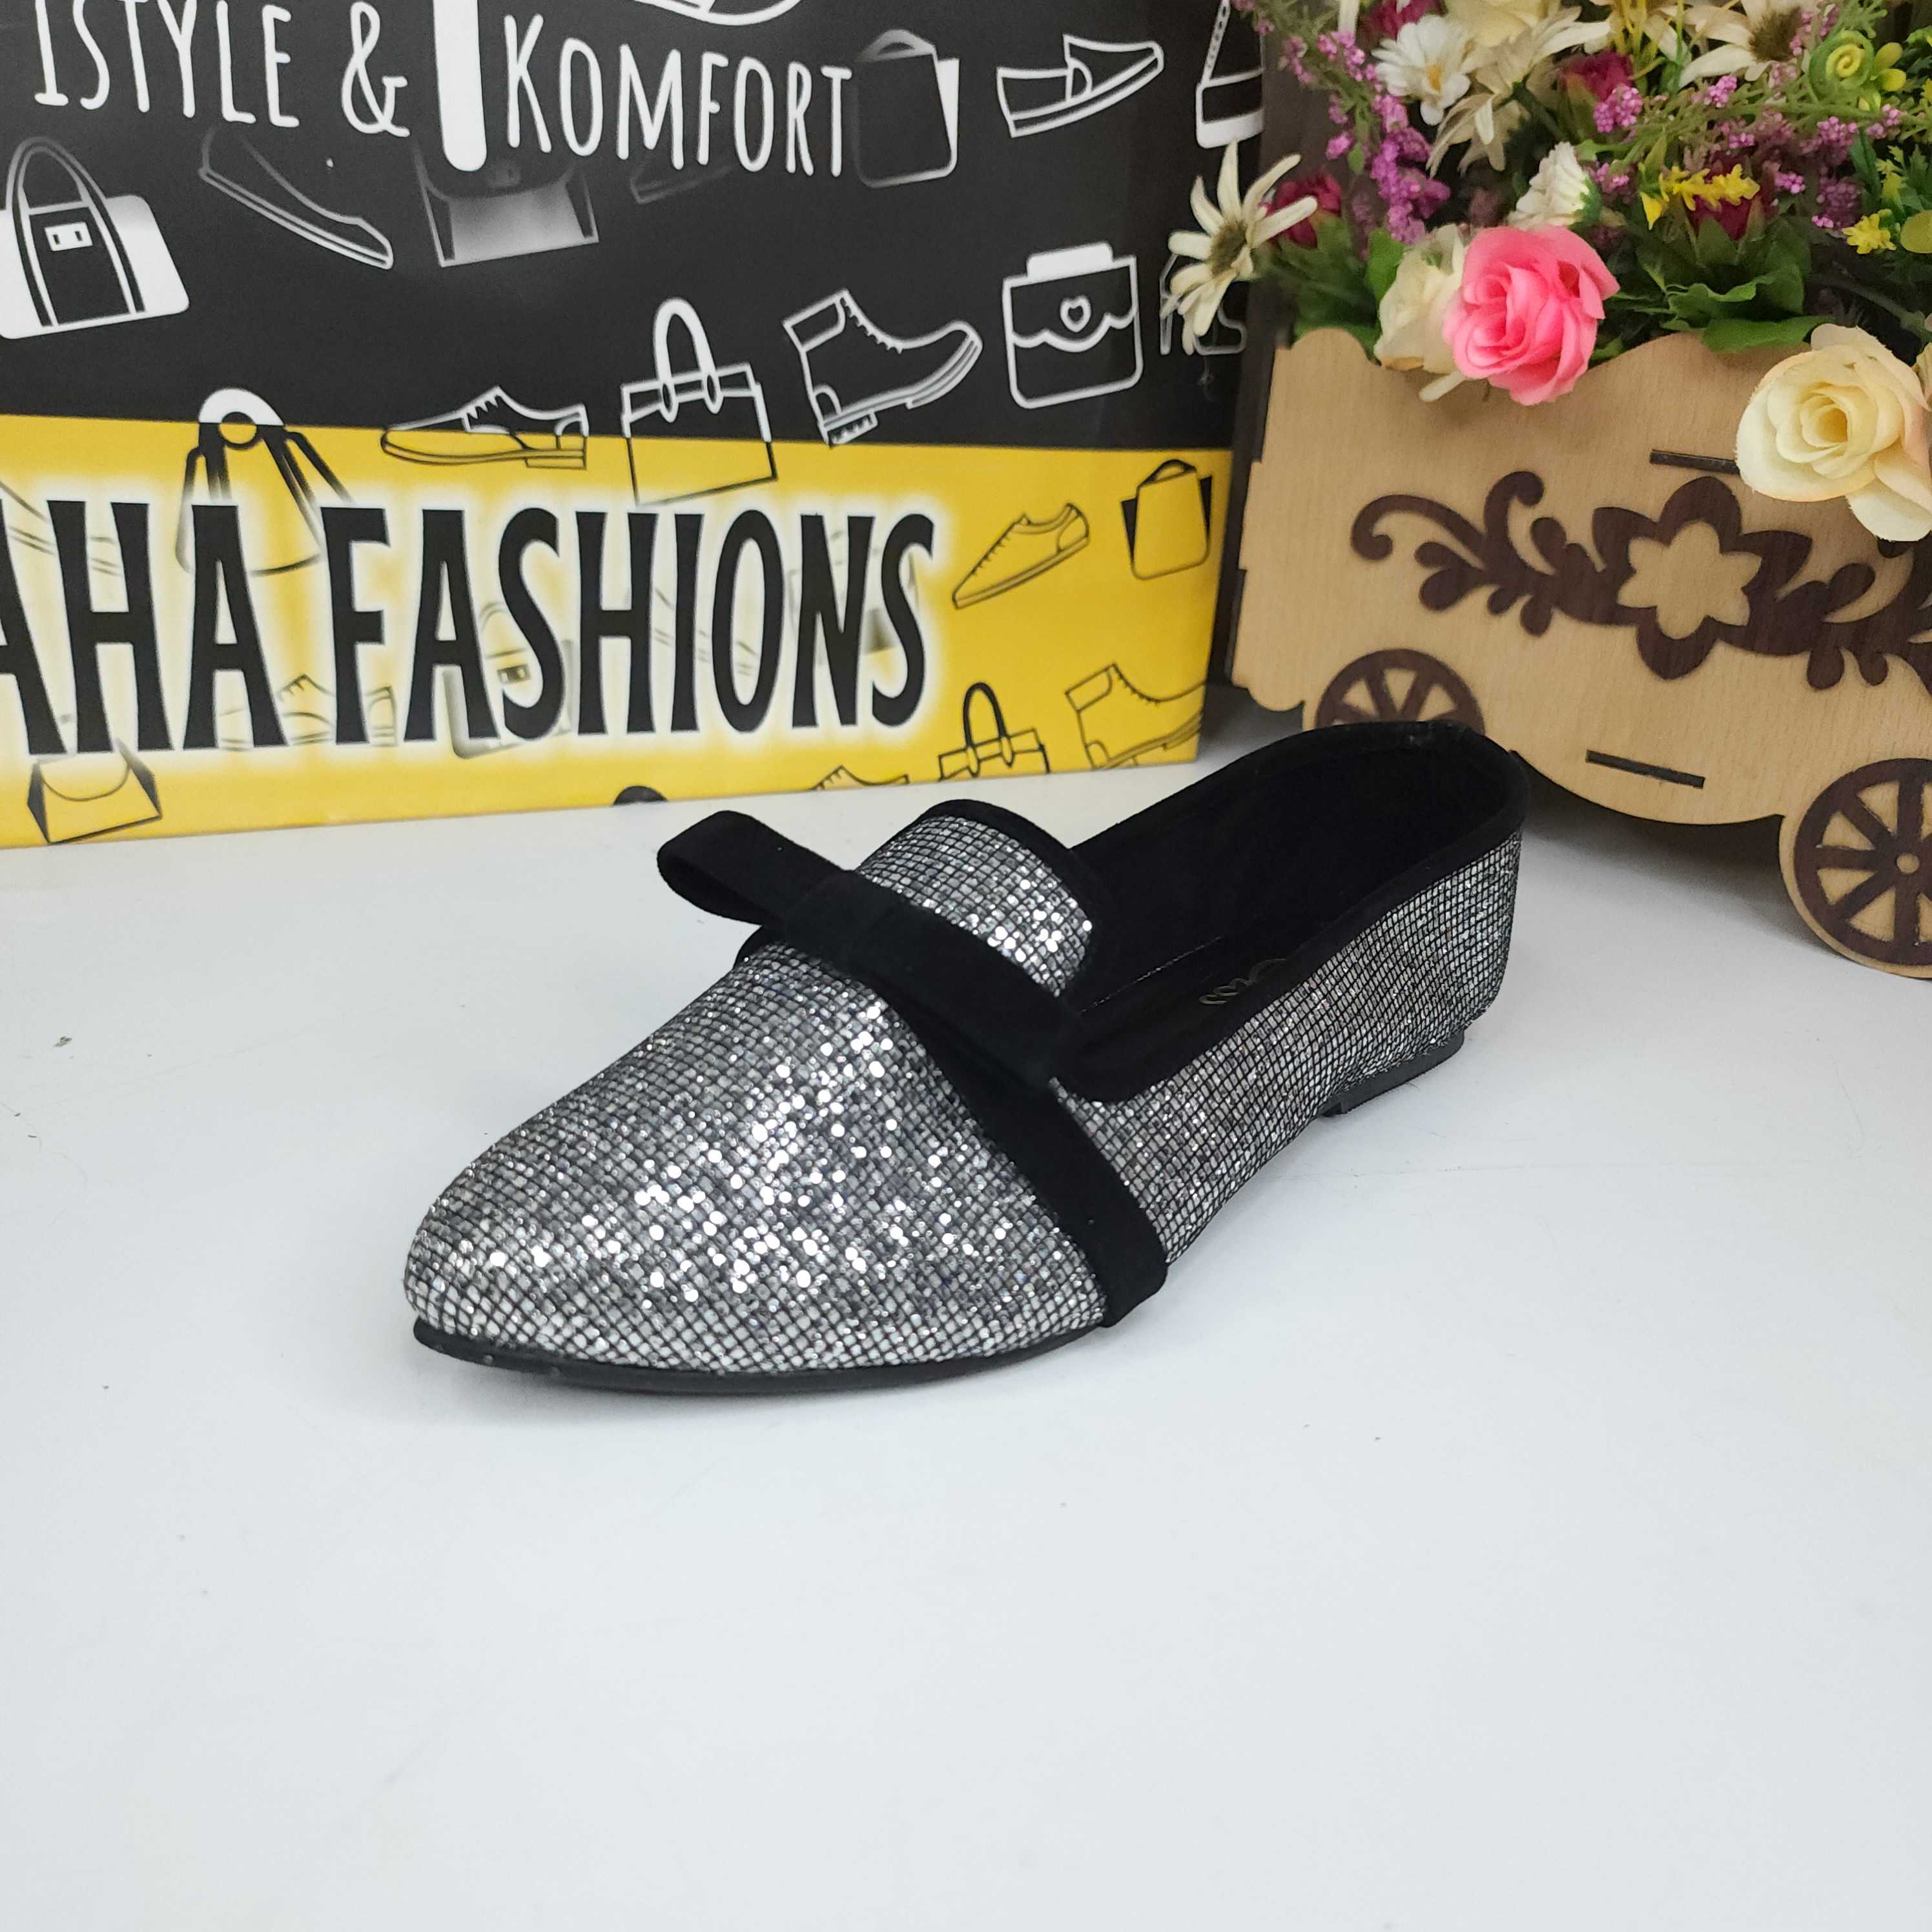 Silver Glitter Pumps - Maha fashions -  Women Footwear